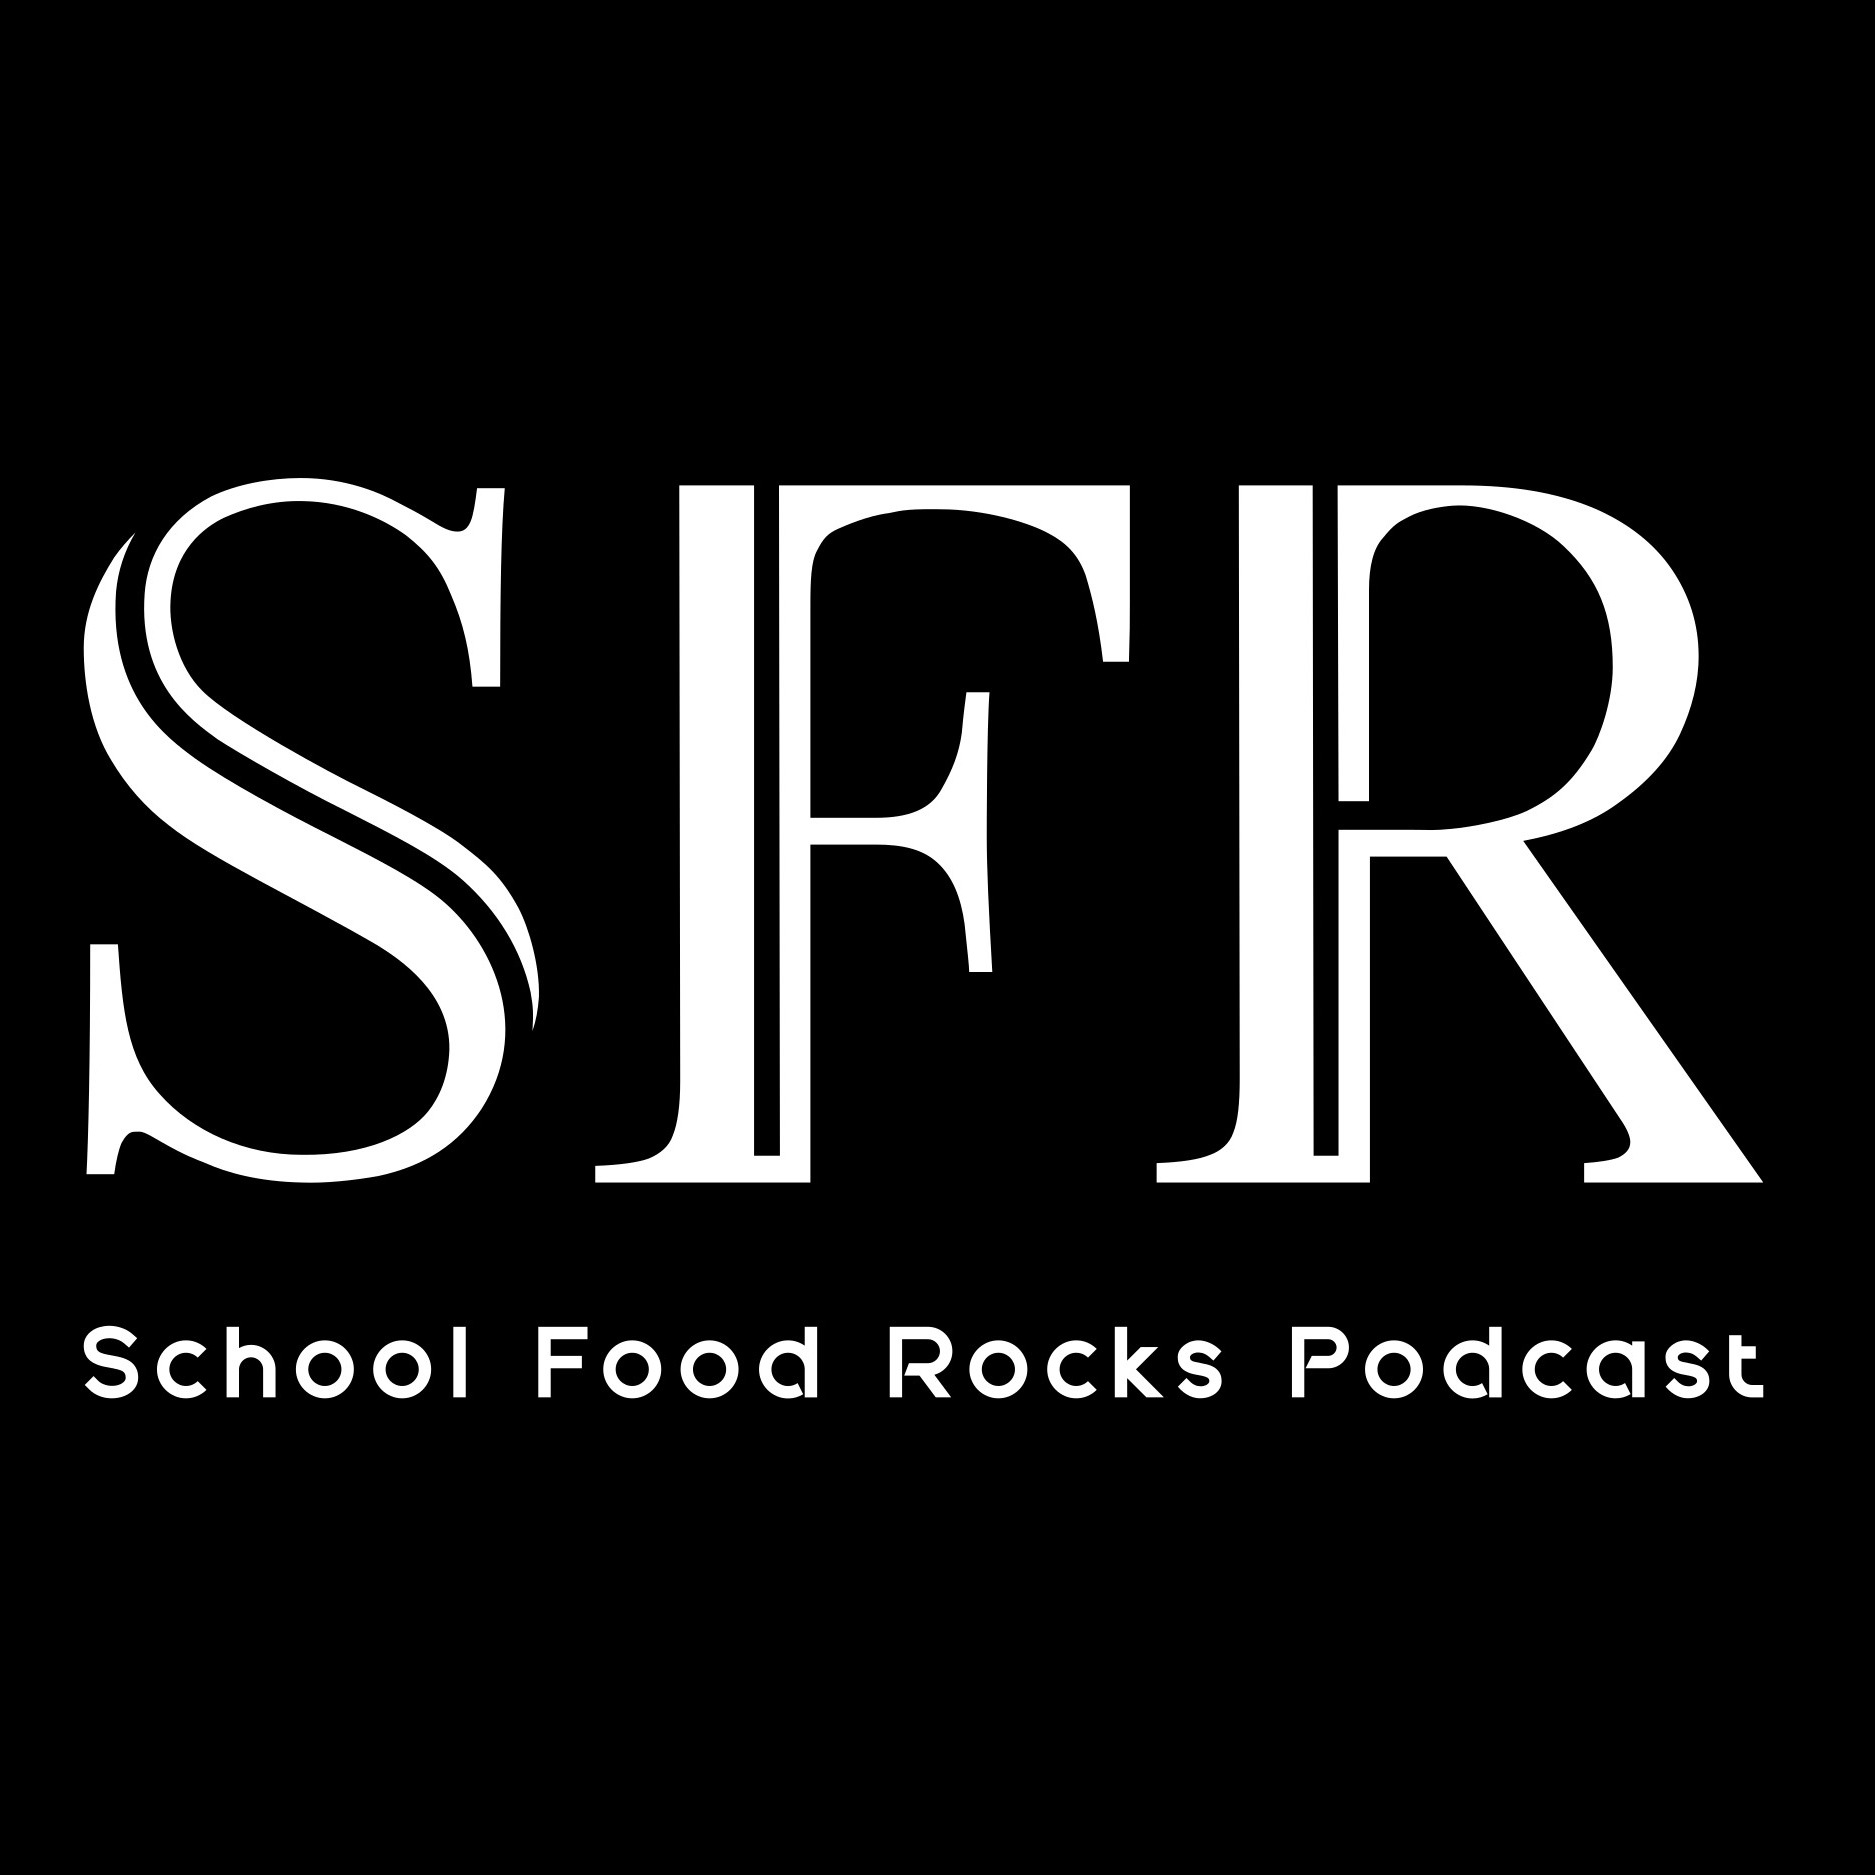 The School Food Rocks Podcast